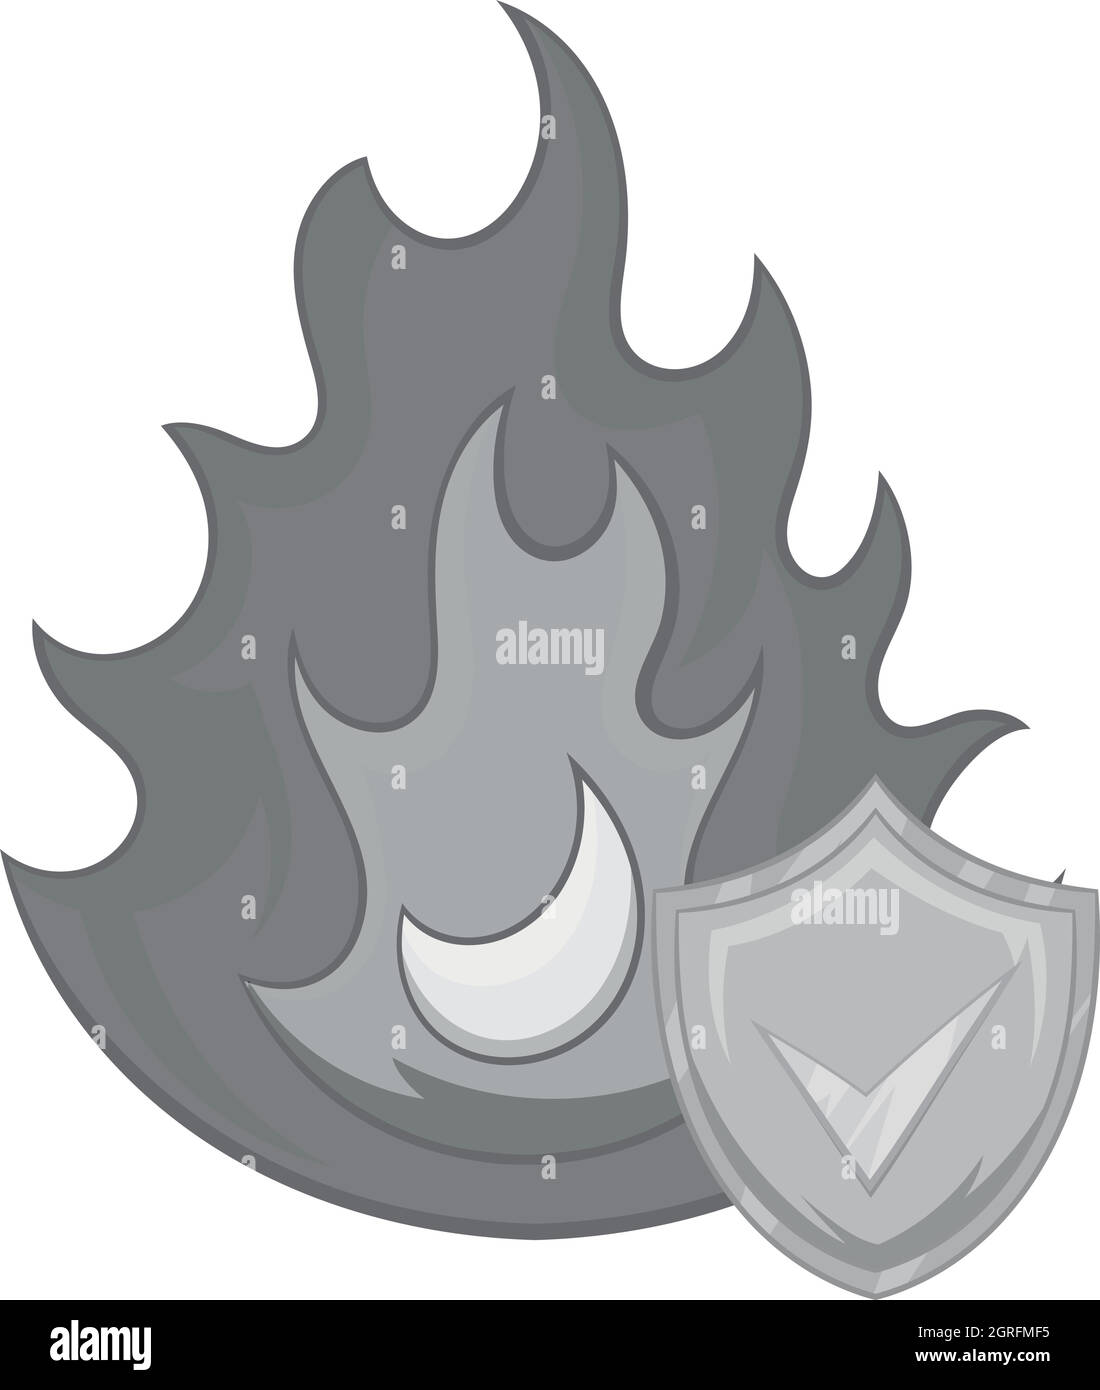 Fire insurance icon, black monochrome style Stock Vector